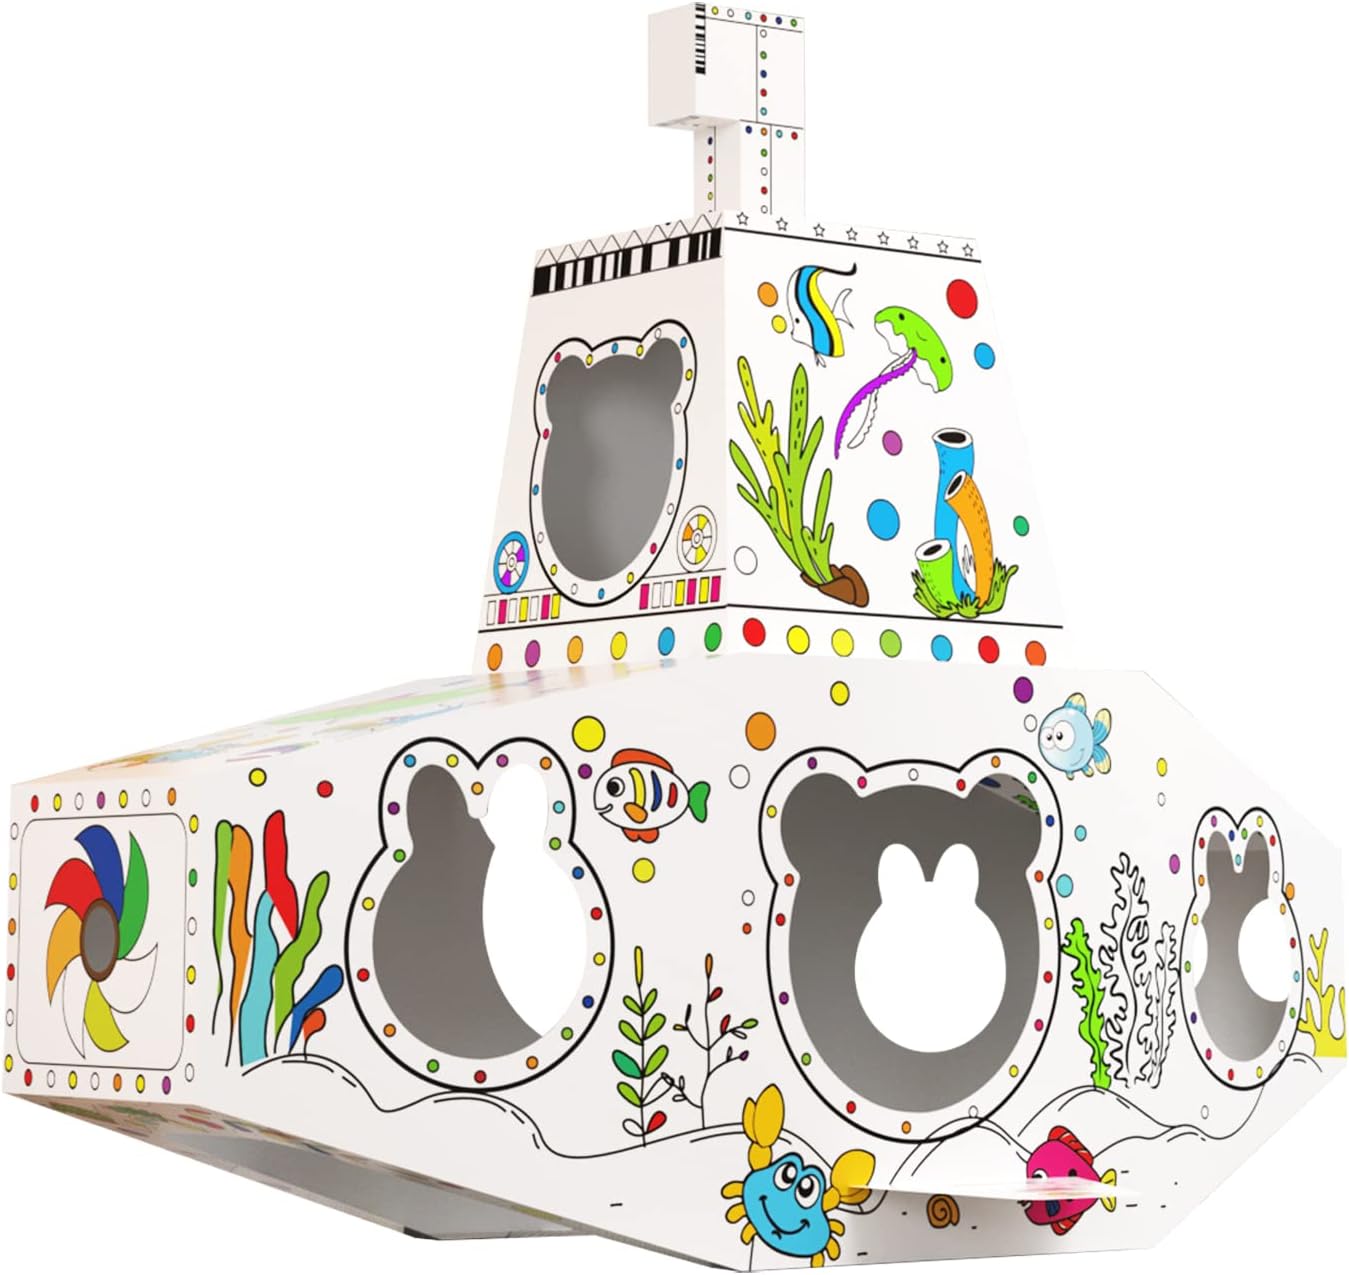 Submarine Cardboard Playhouse for Kids- DIY Kids [...]